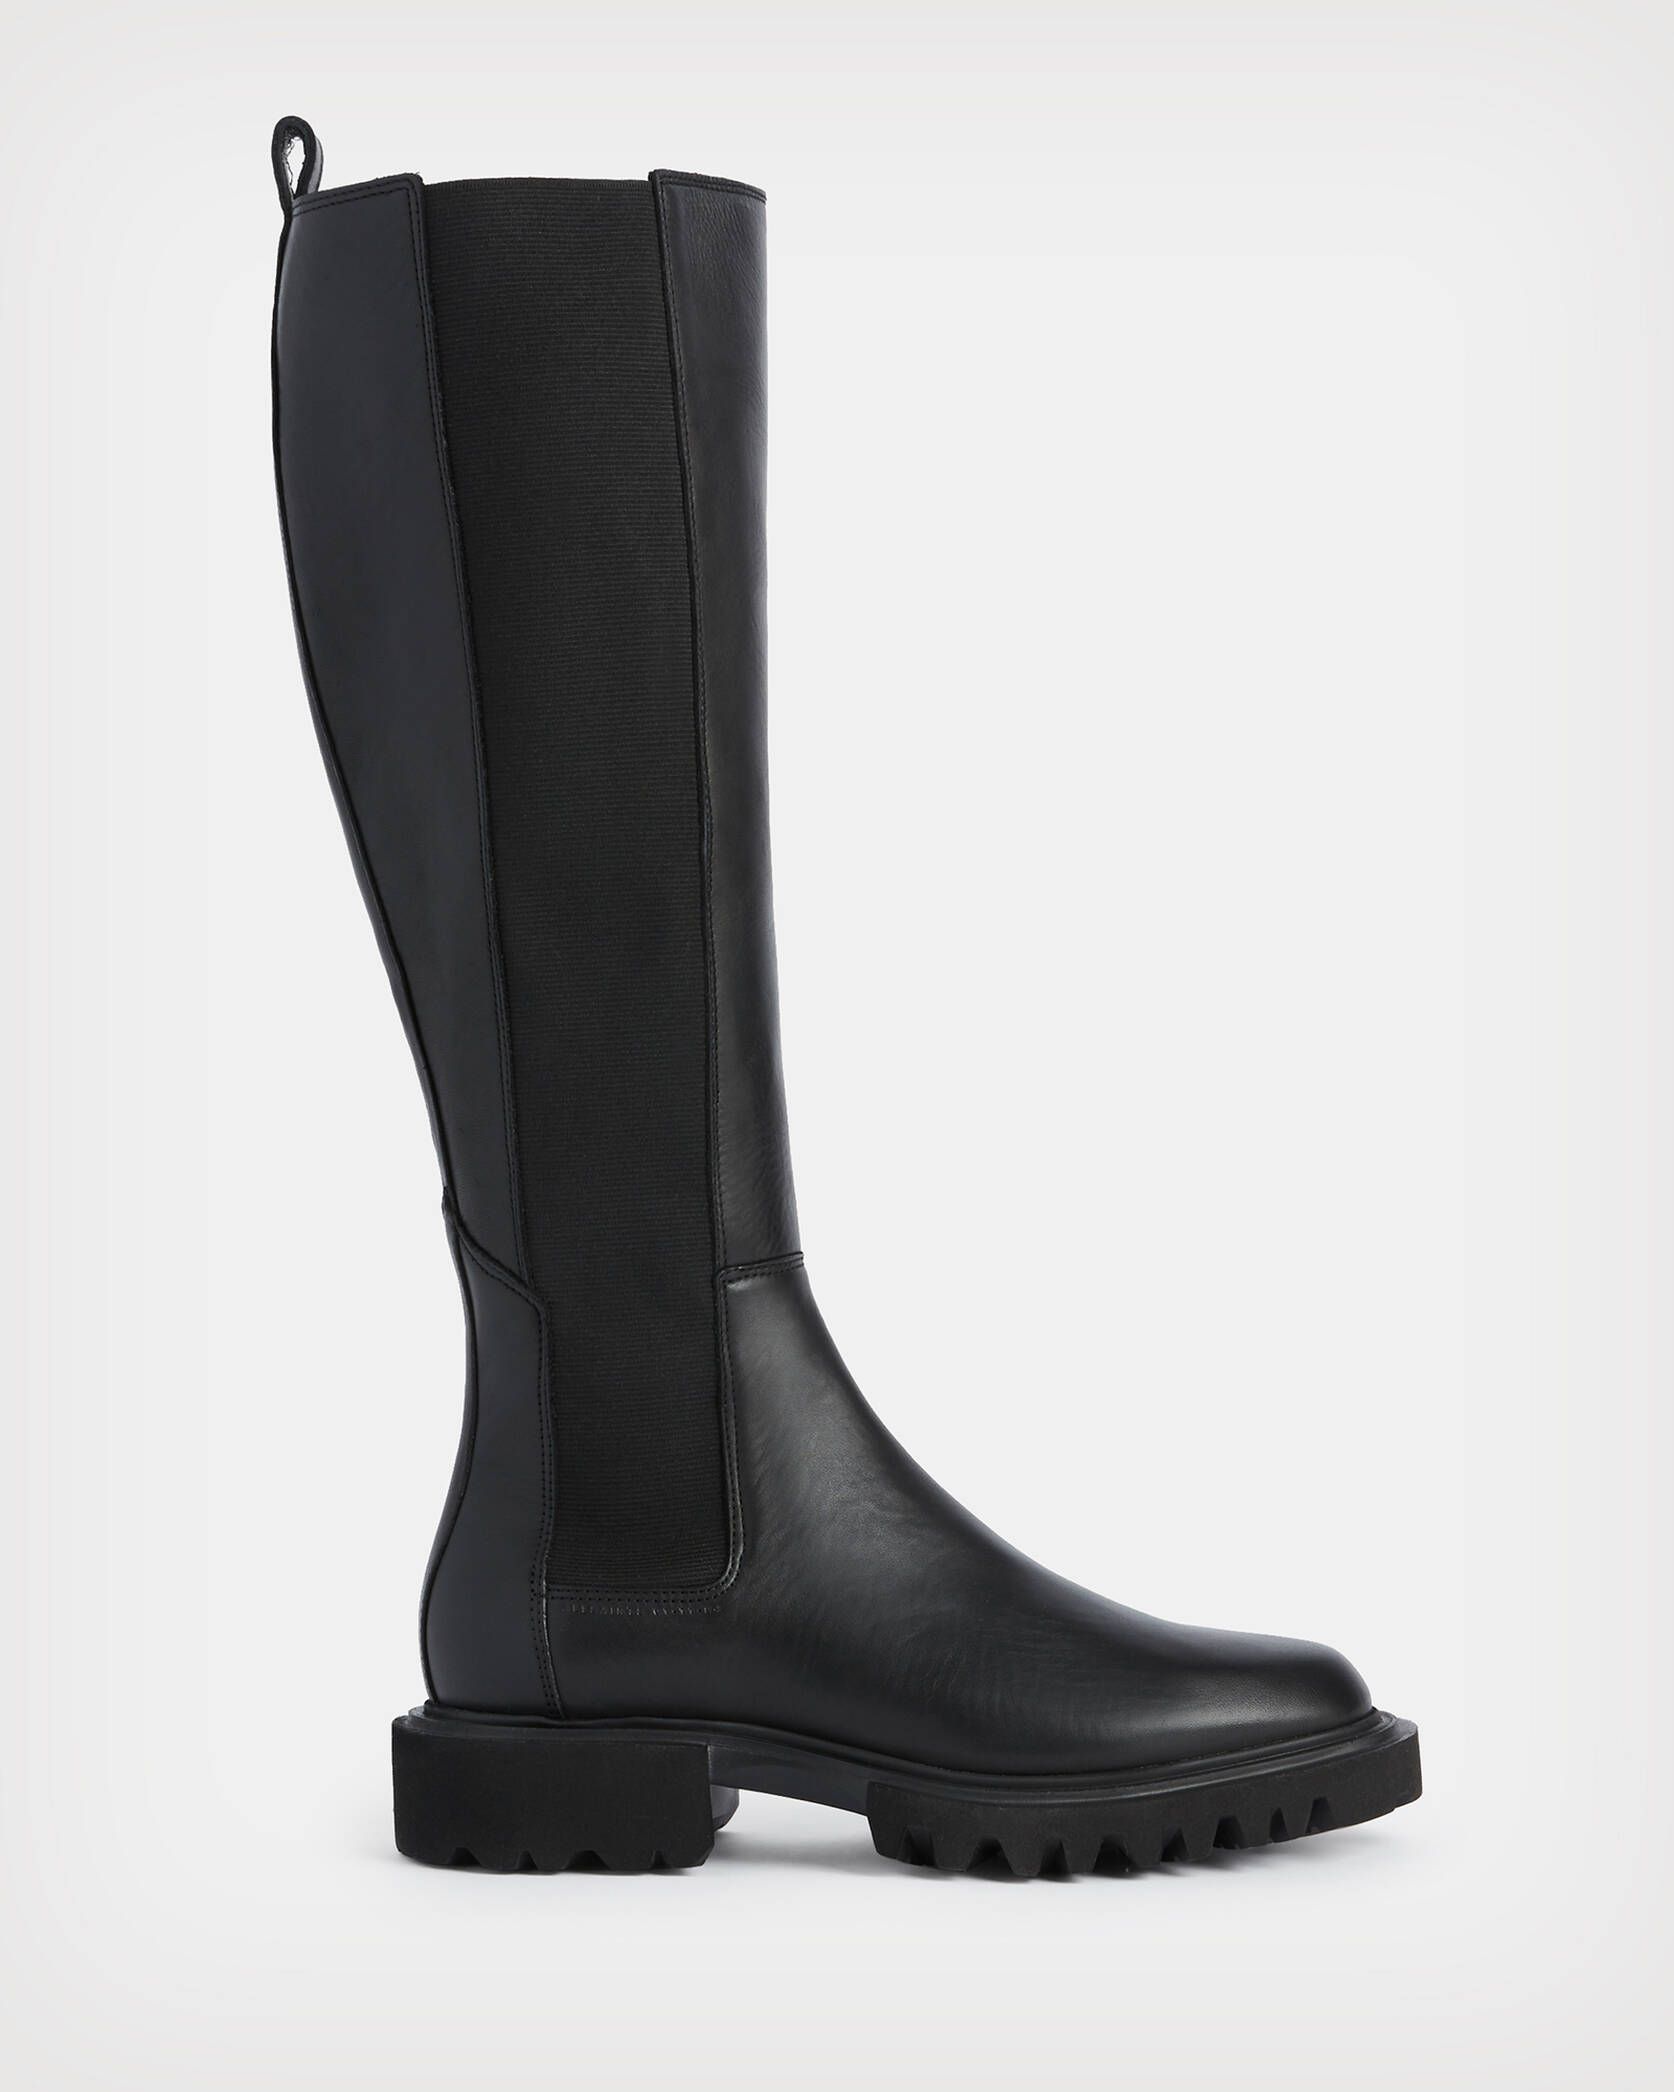 Maeve Knee High Slip On Leather Boots Black | ALLSAINTS | AllSaints UK